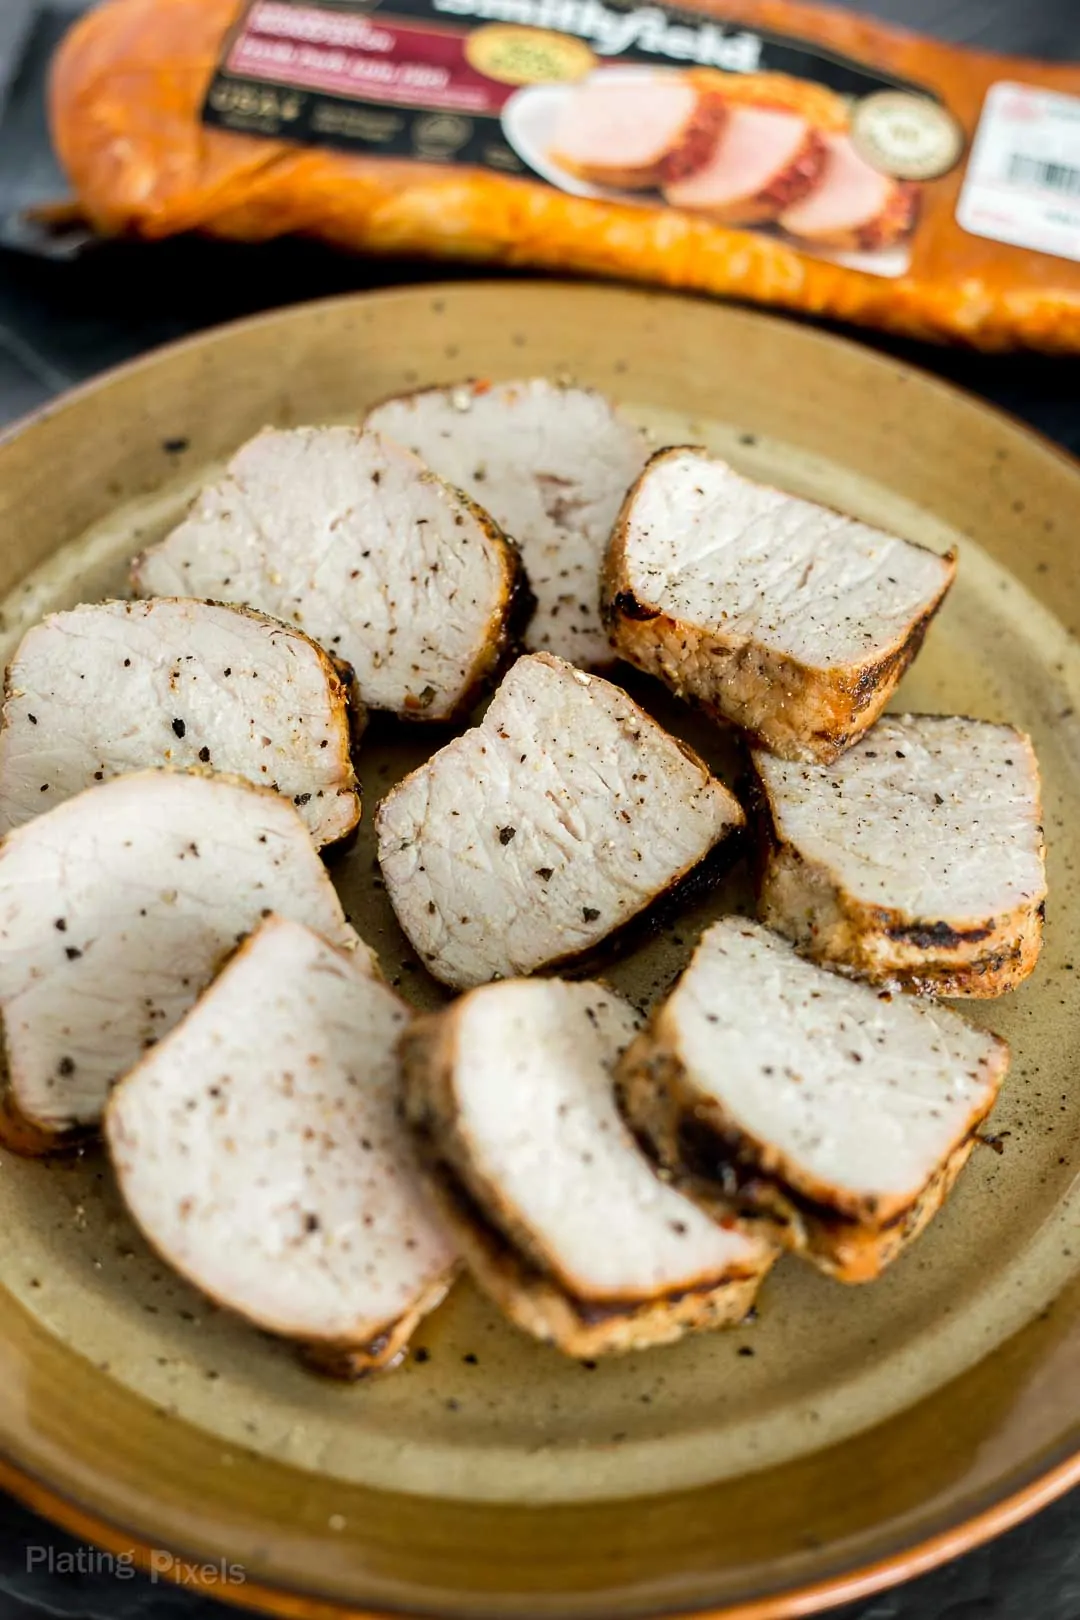 Slices of grilled pork tenderloin on a plate